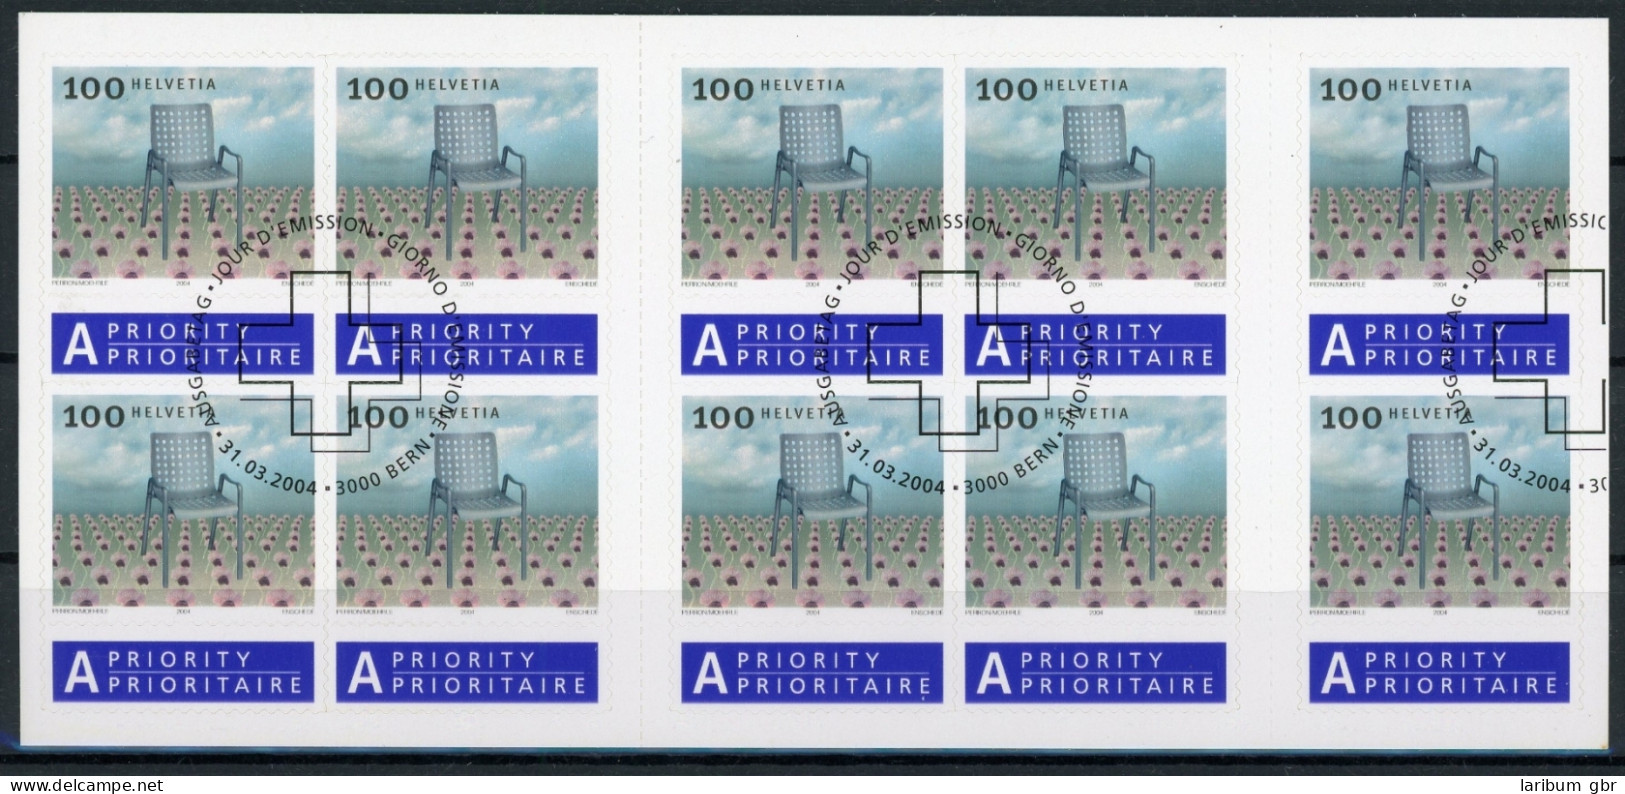 Schweiz Markenheftchen 0-137 Design Ersttagssonderstempel #IA050 - Carnets